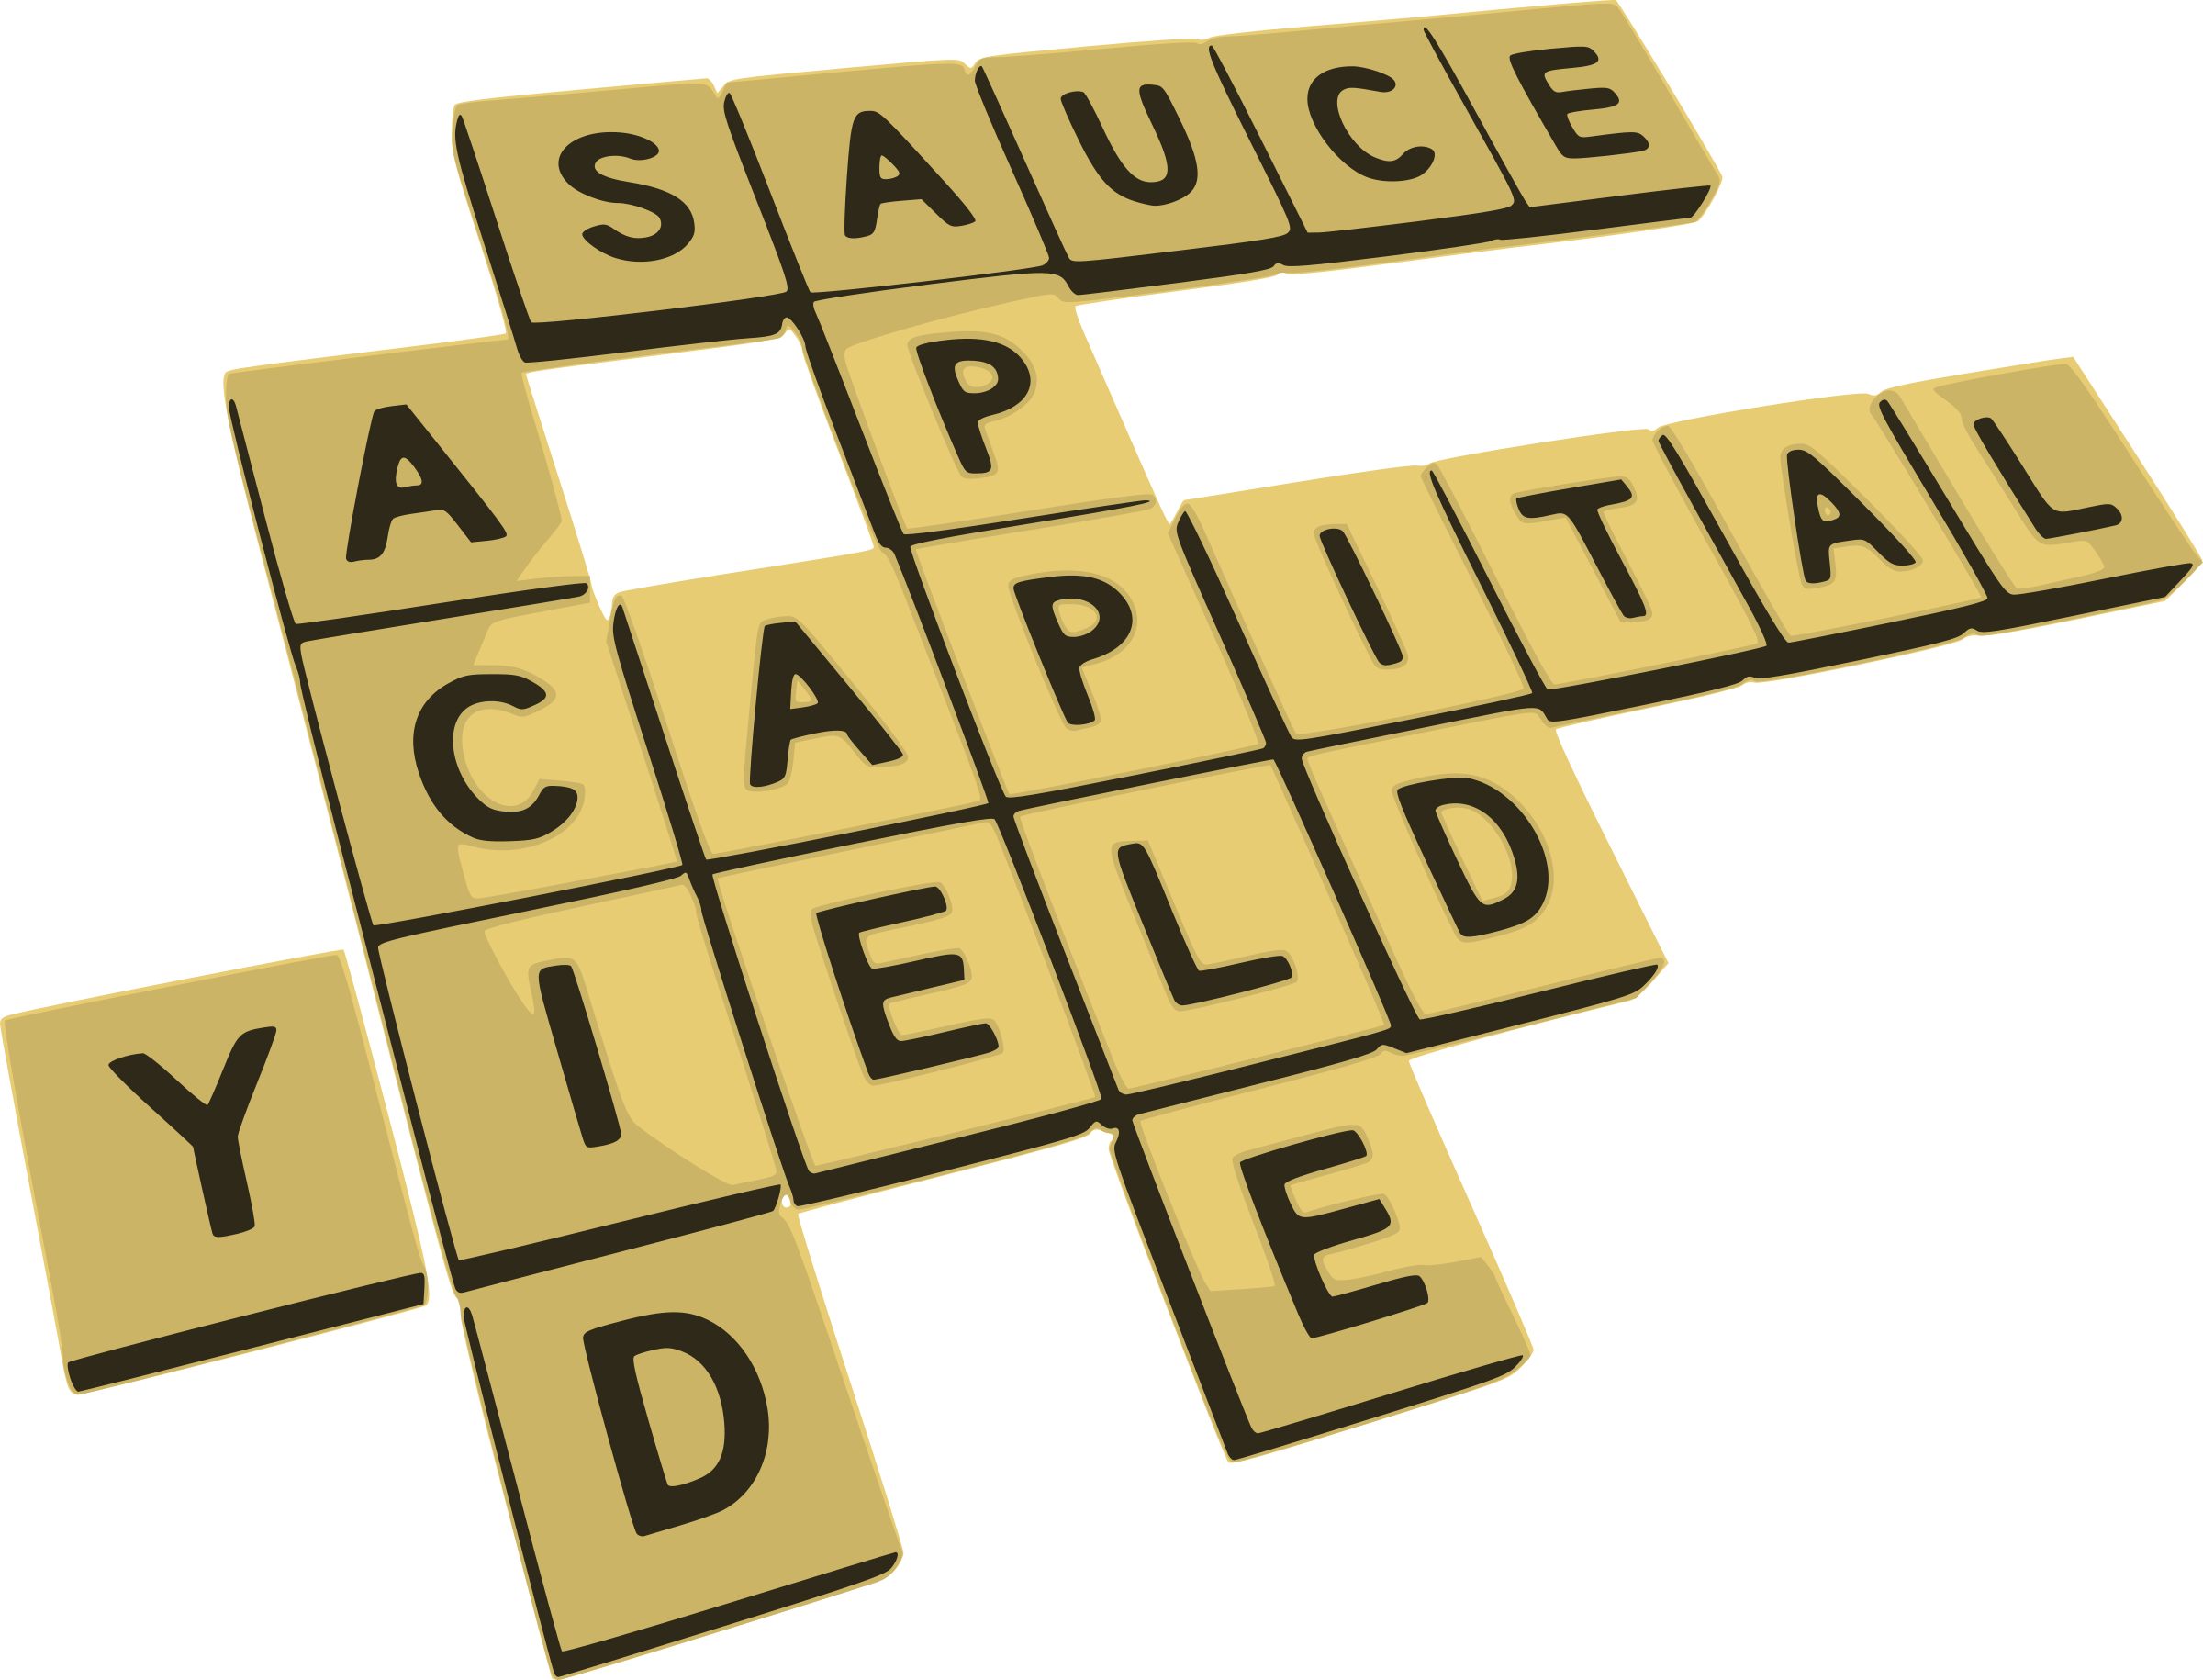 Crossword letter tiles big. Words clipart tile